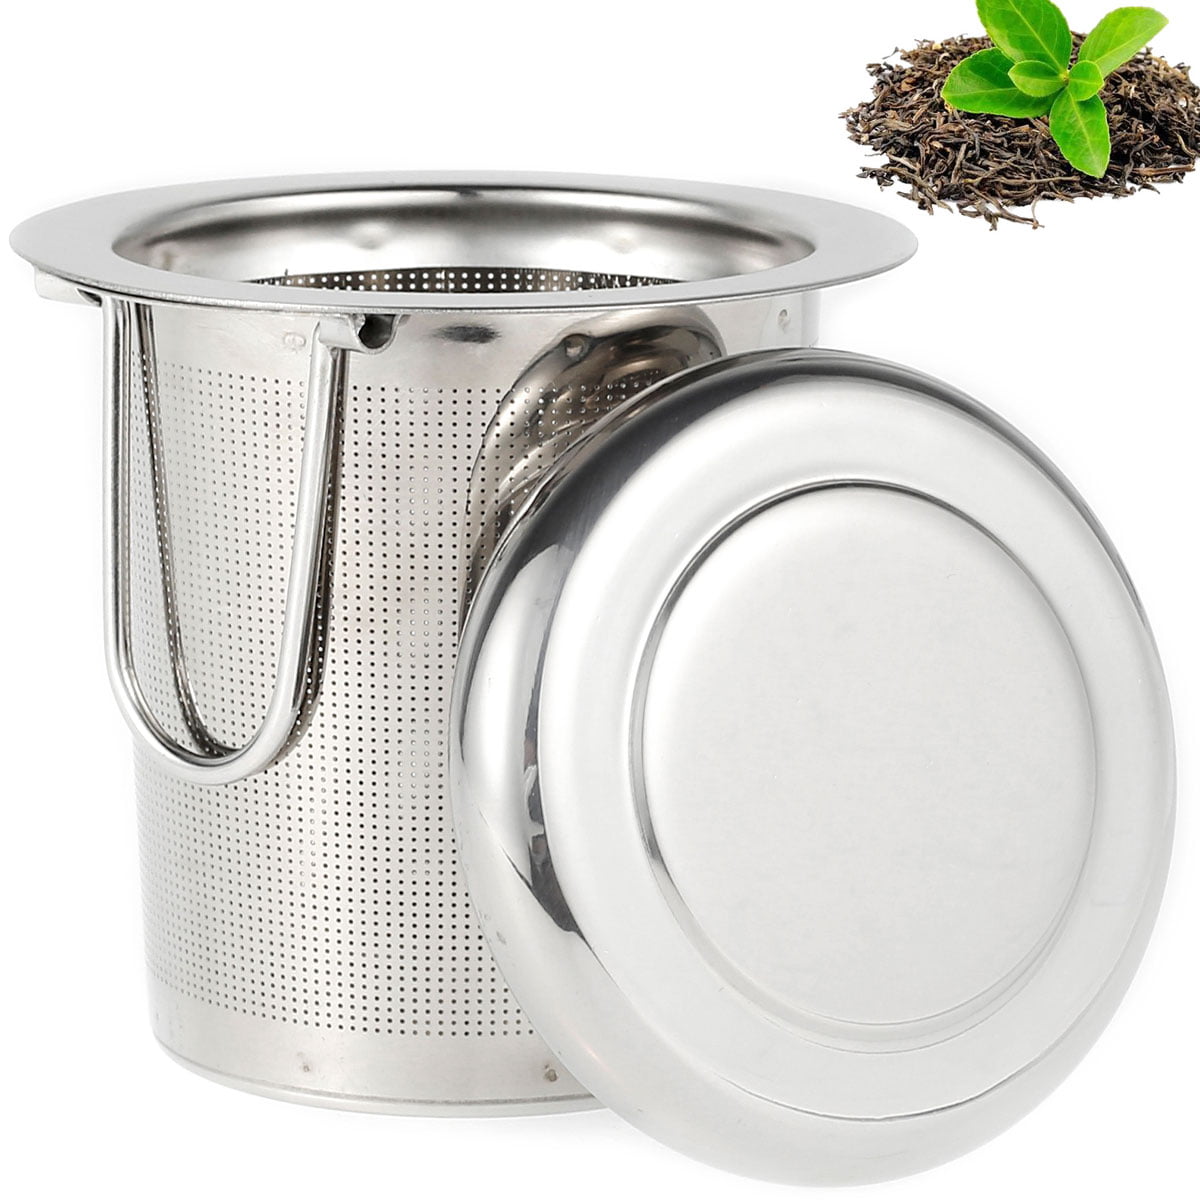 Reusable Stainless Steel Tea Infuser Basket Fine Mesh Tea Strainer with 2 Handle 